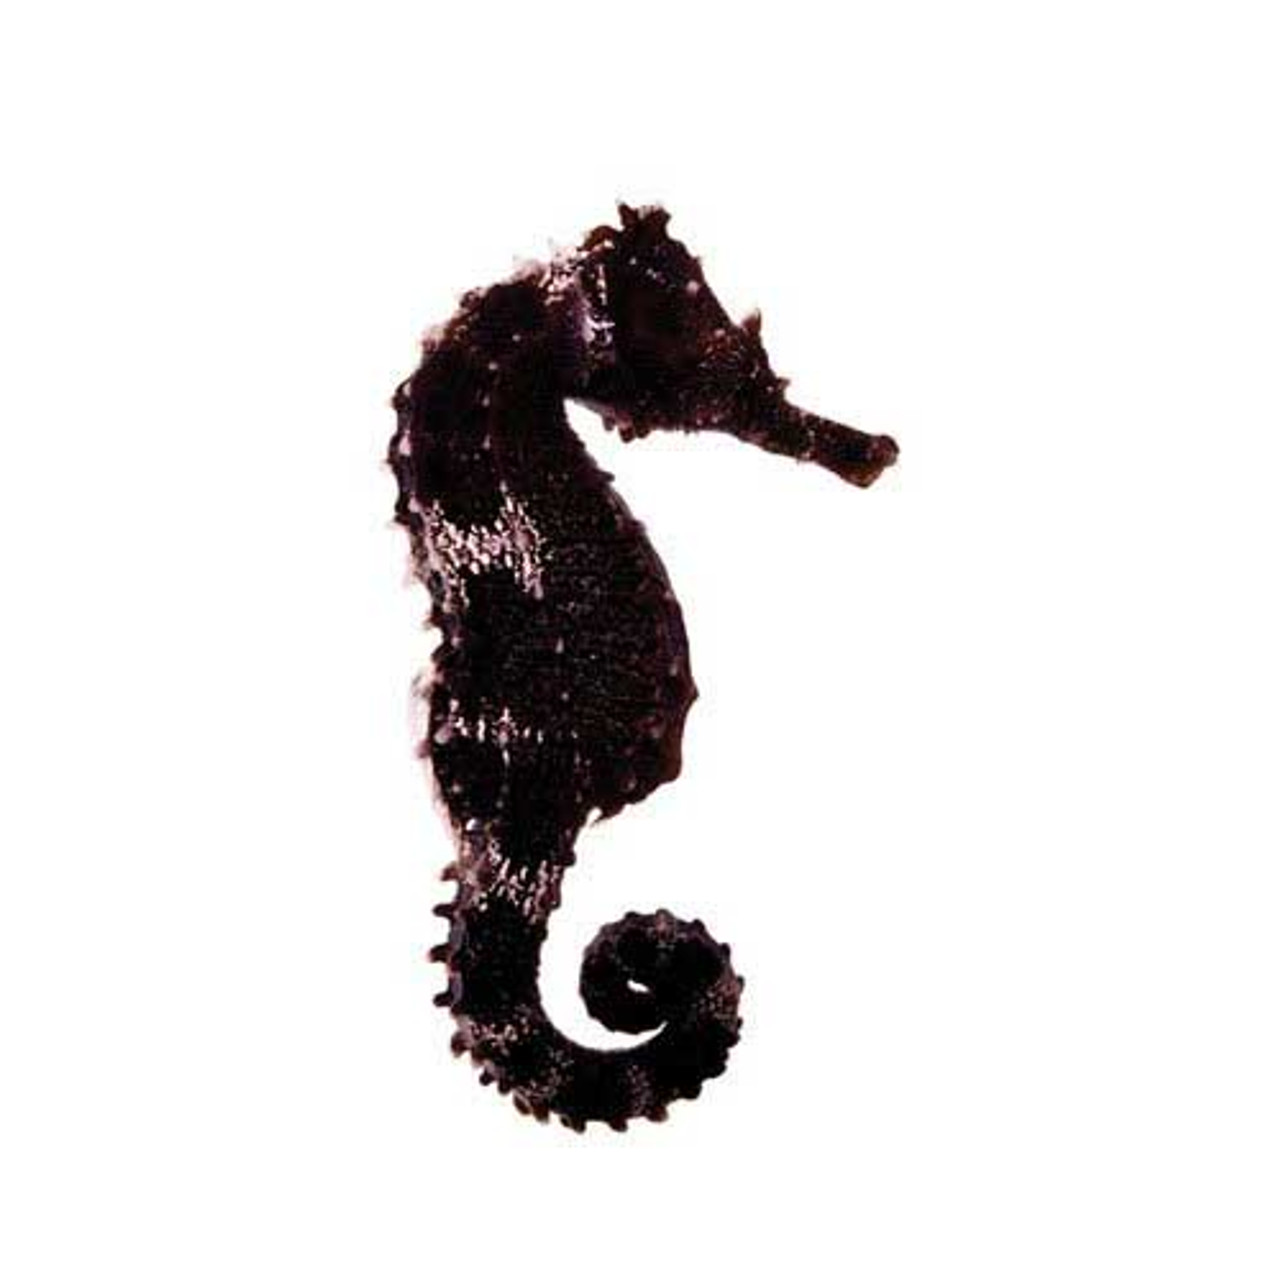 Captive-Bred Lined Seahorse - Unsexed (Hippocampus erectus) ORA 